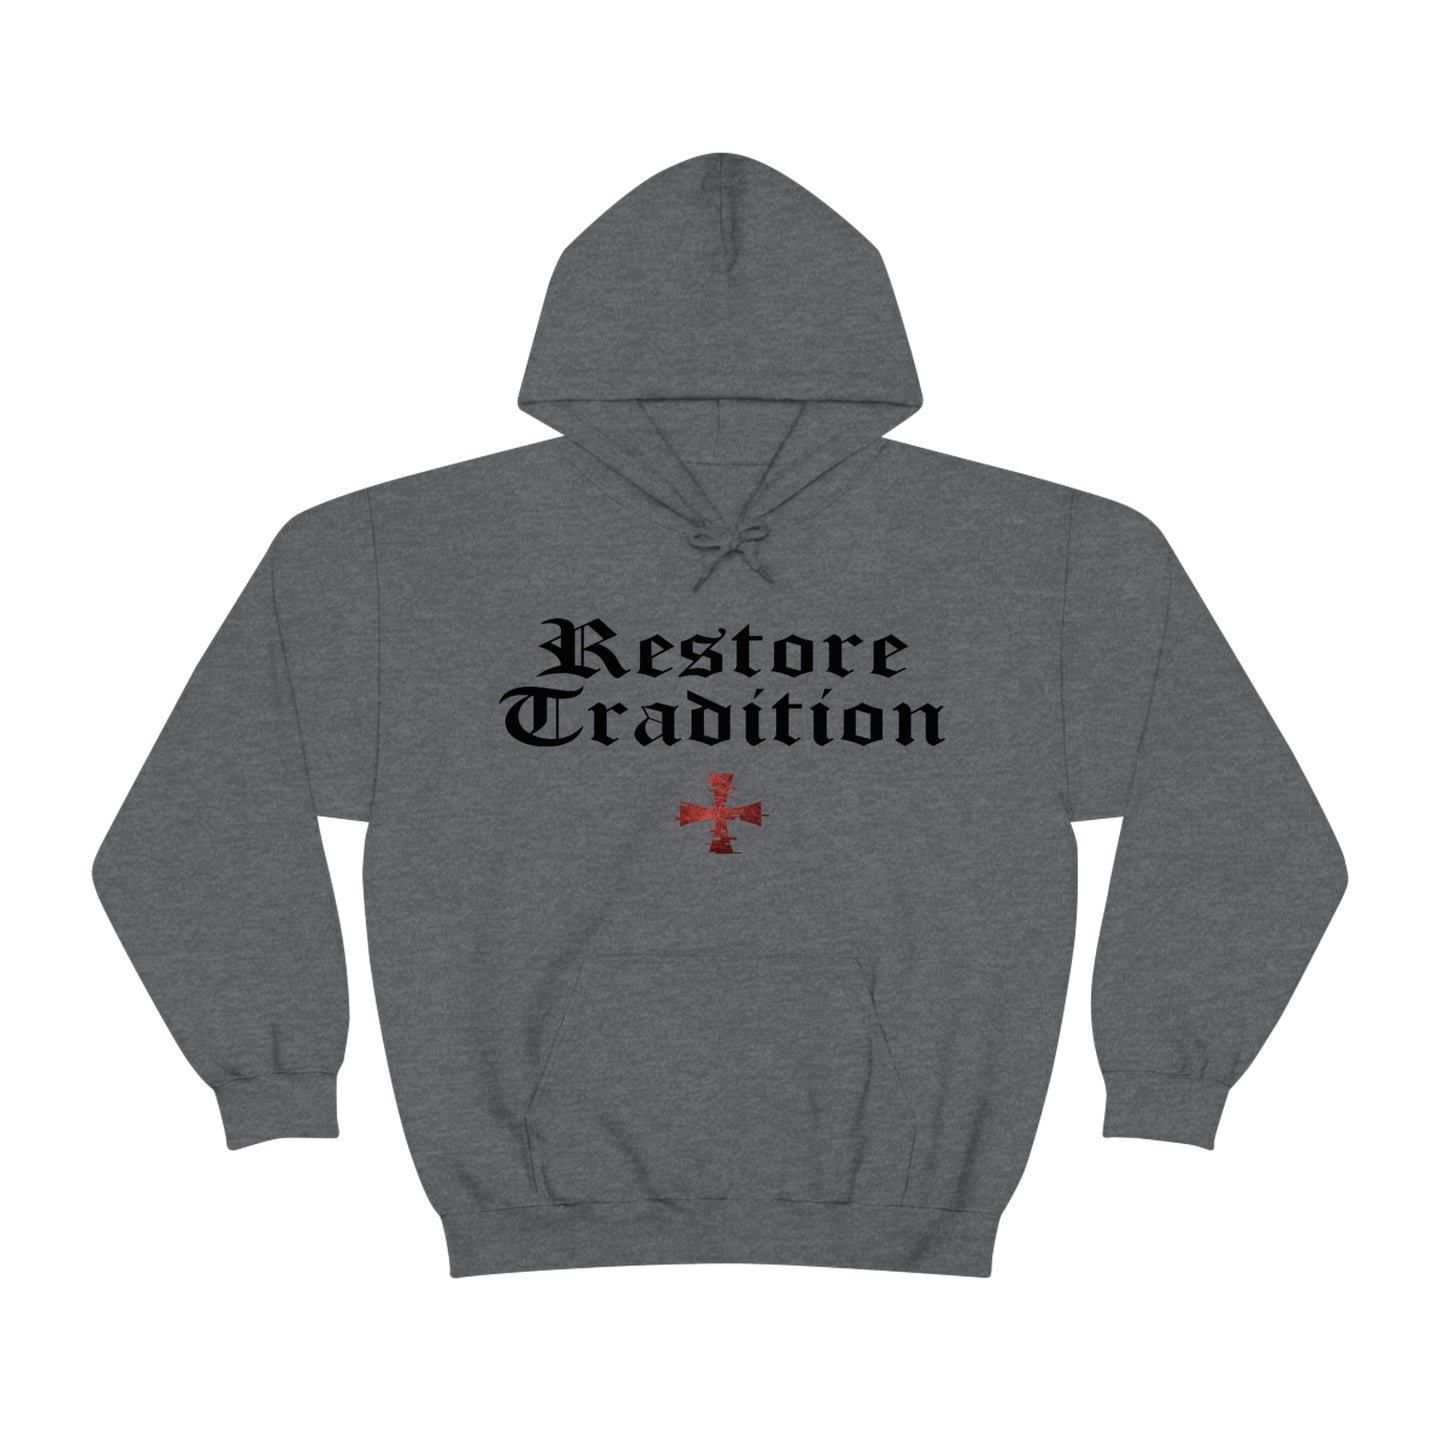 Dark Gray Gildan hoodie with "Restore Tradition" and a red digital crusader Sanctus Servo logo printed on it.